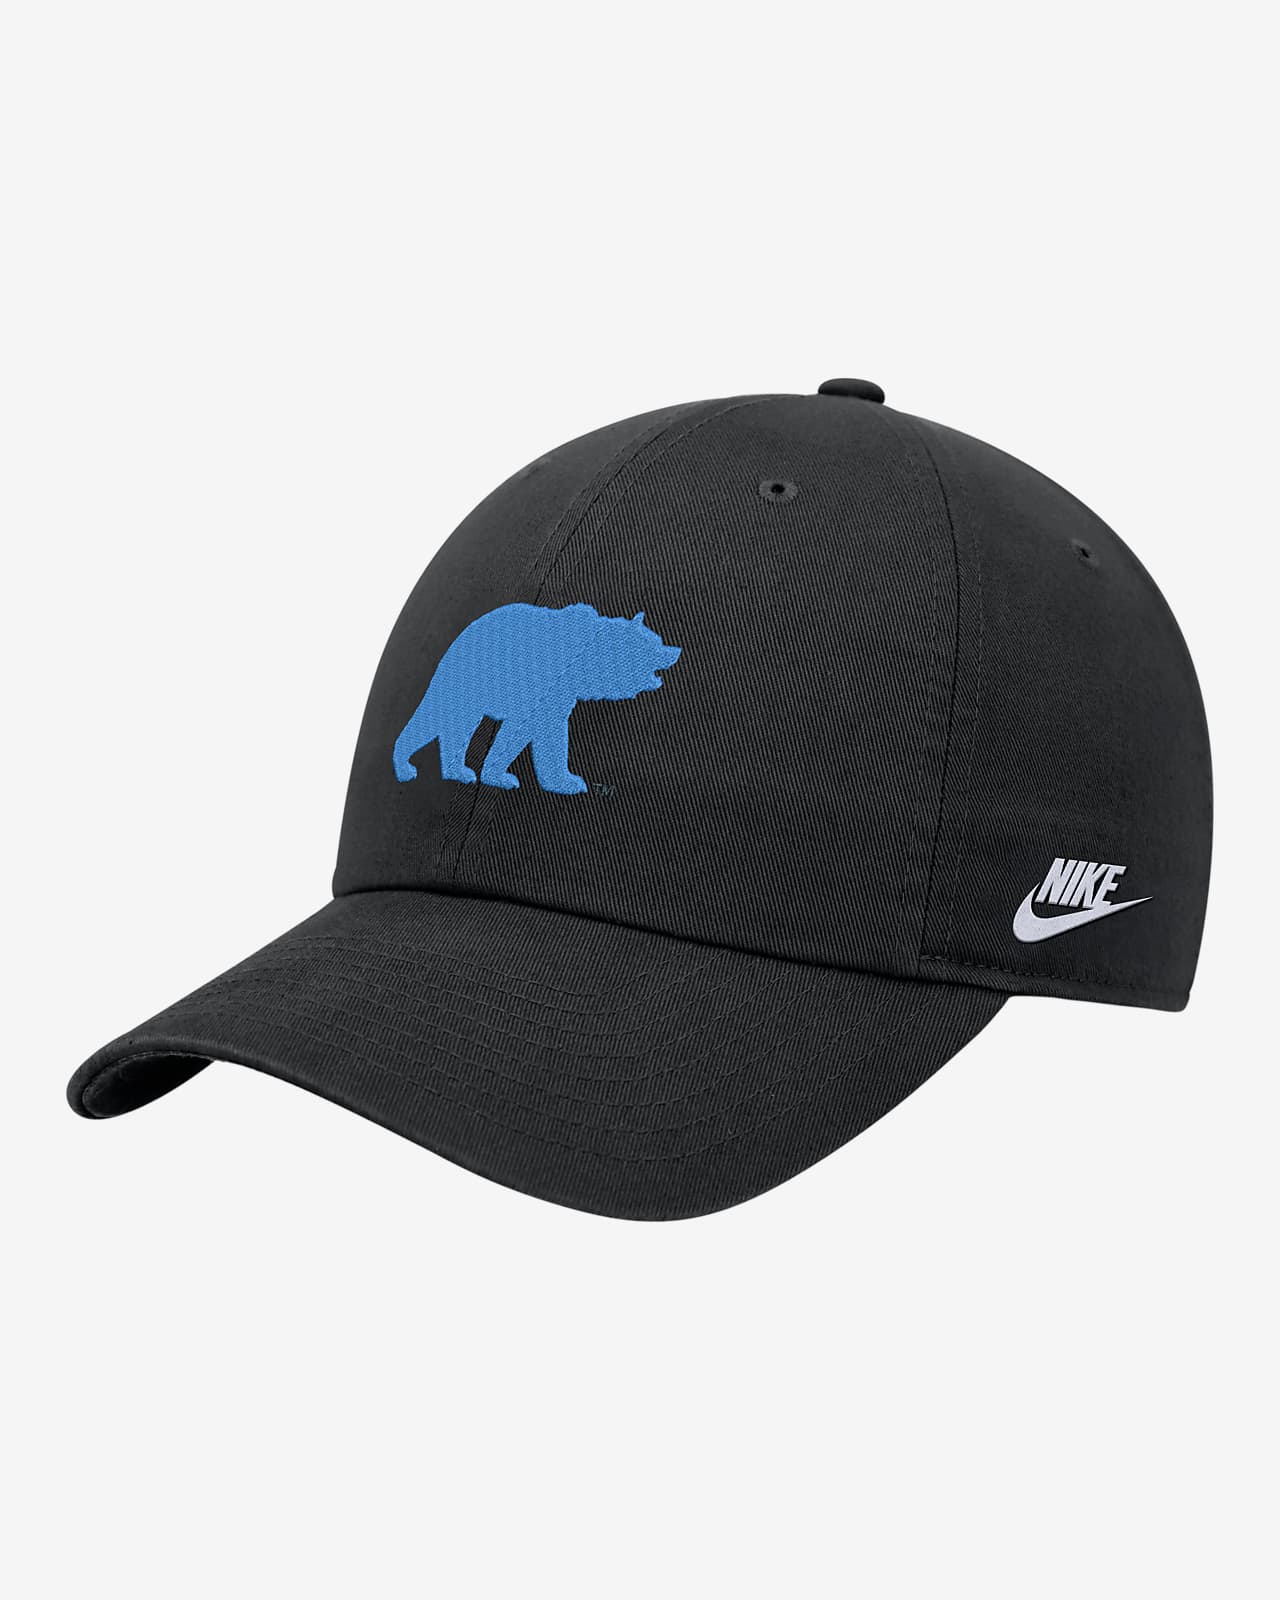 UCLA Nike College Cap